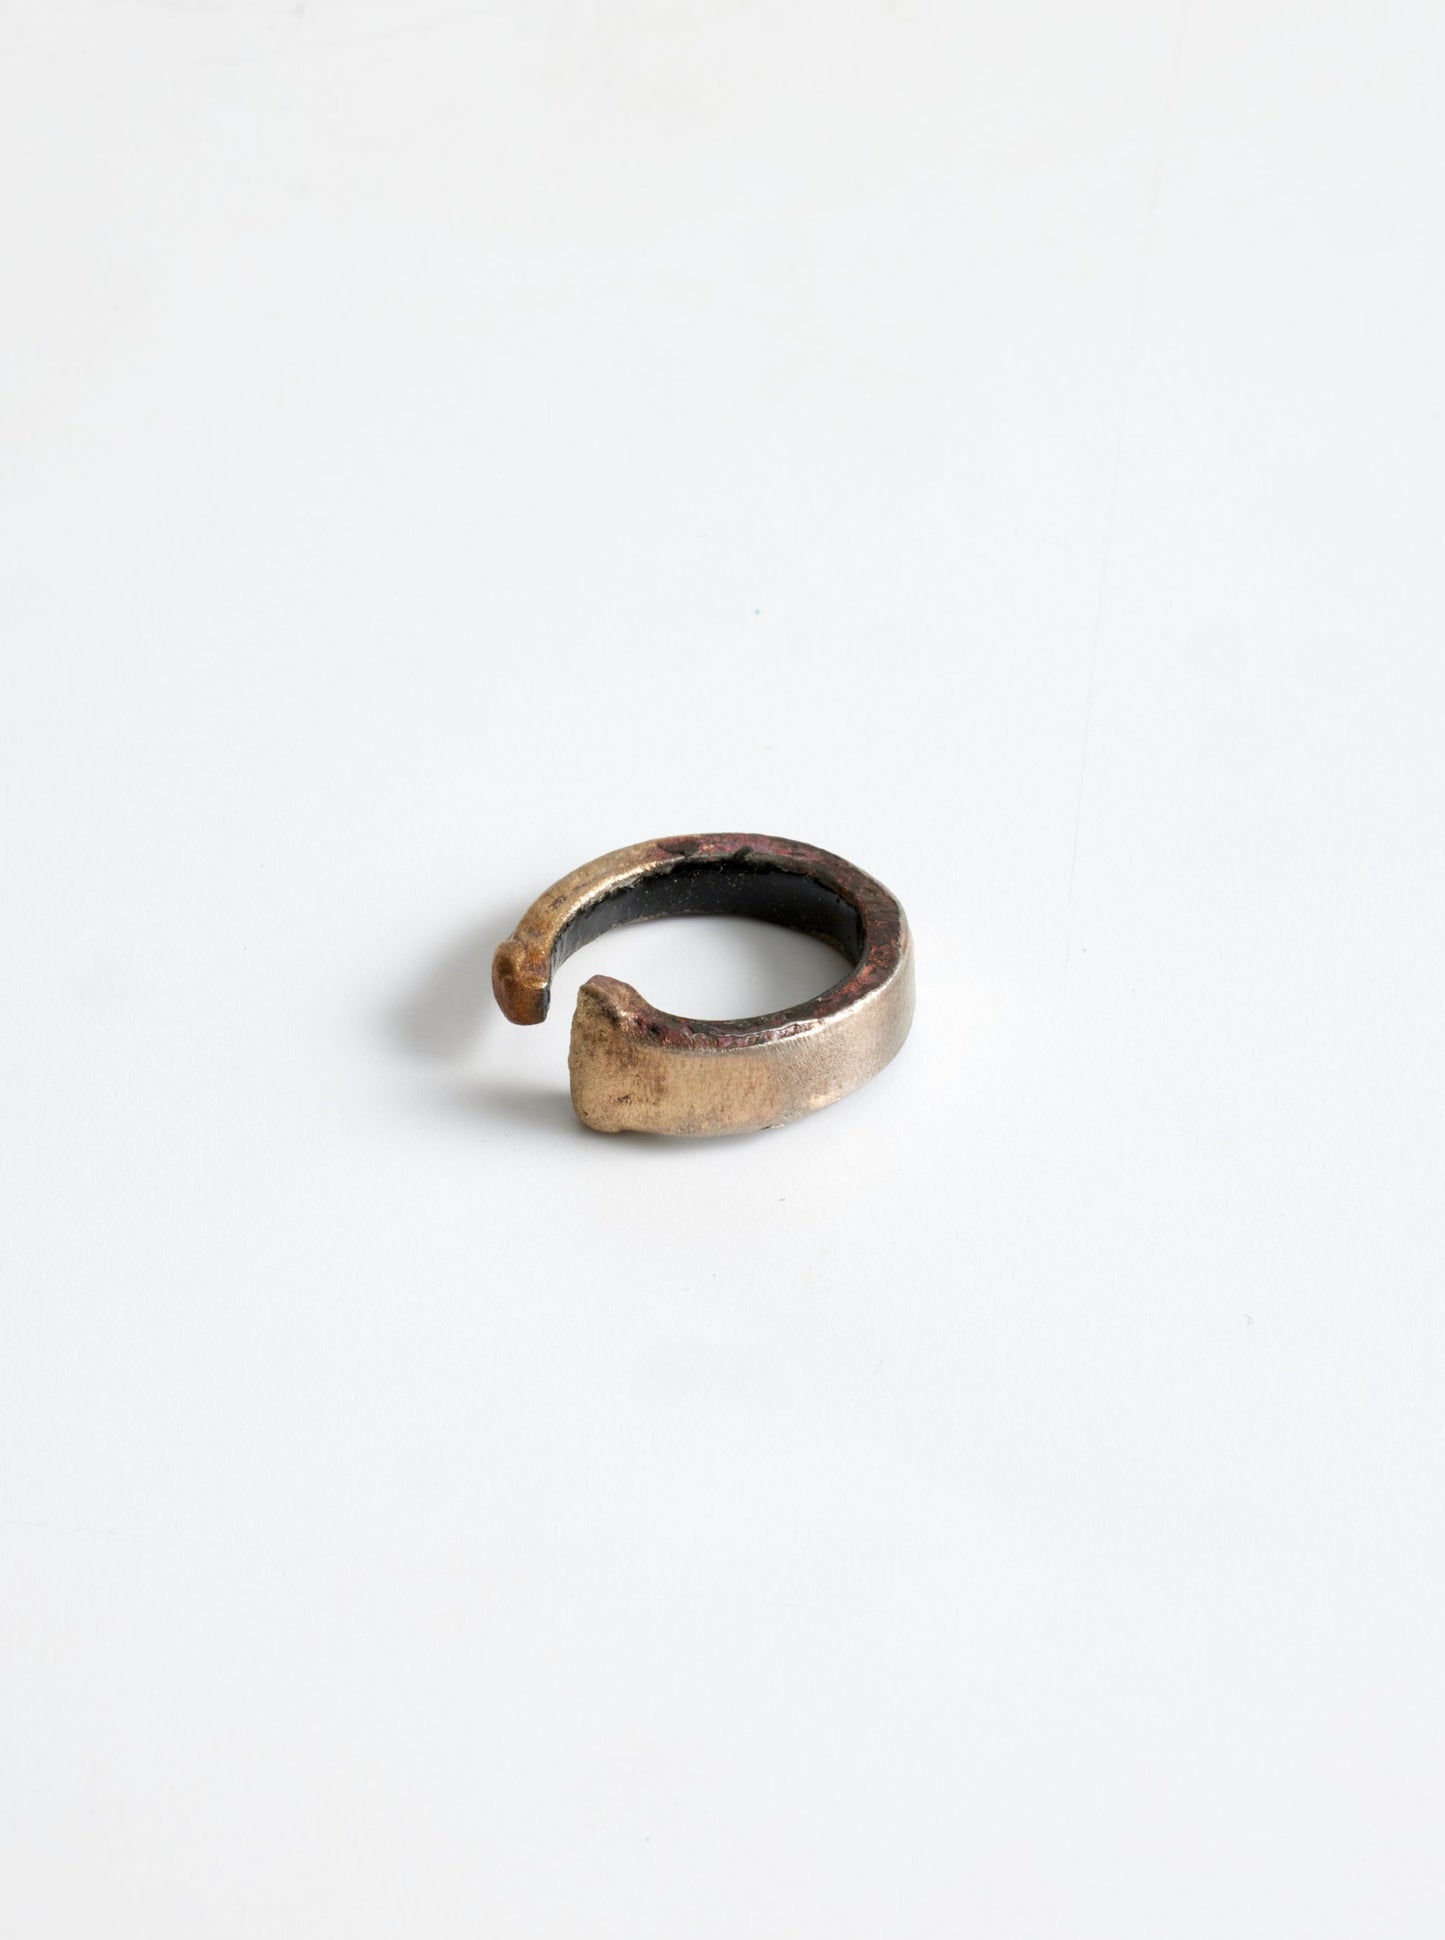 Antique Bronze Nail Ring